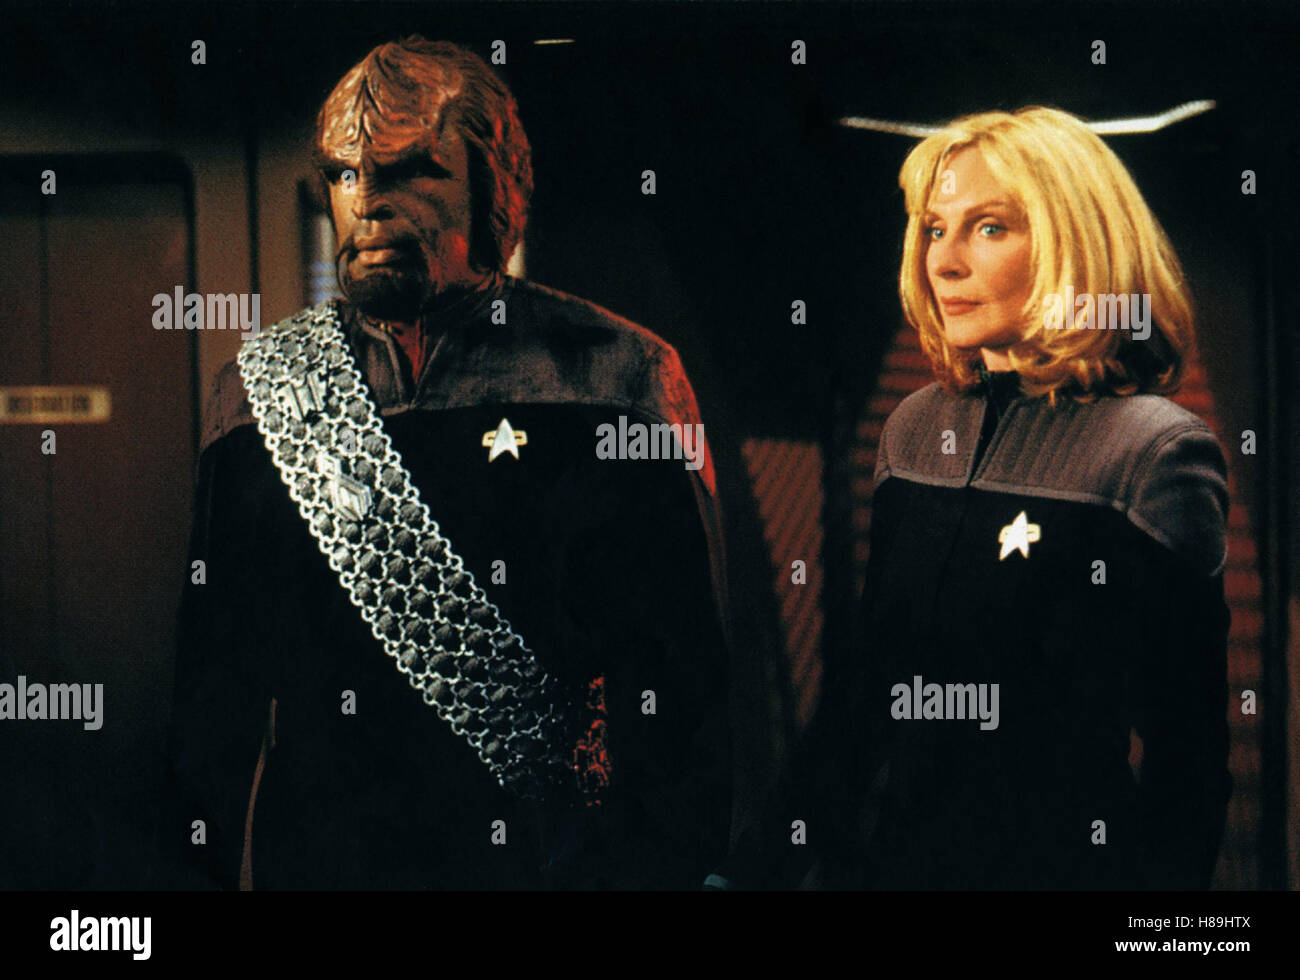 Star Trek - Der erste Kontakt, (STAR TREK: FIRST CONTACT) USA 1996, Regie: Jonathan Frakes, MICHAEL DORN, GATES McFADDEN Stock Photo